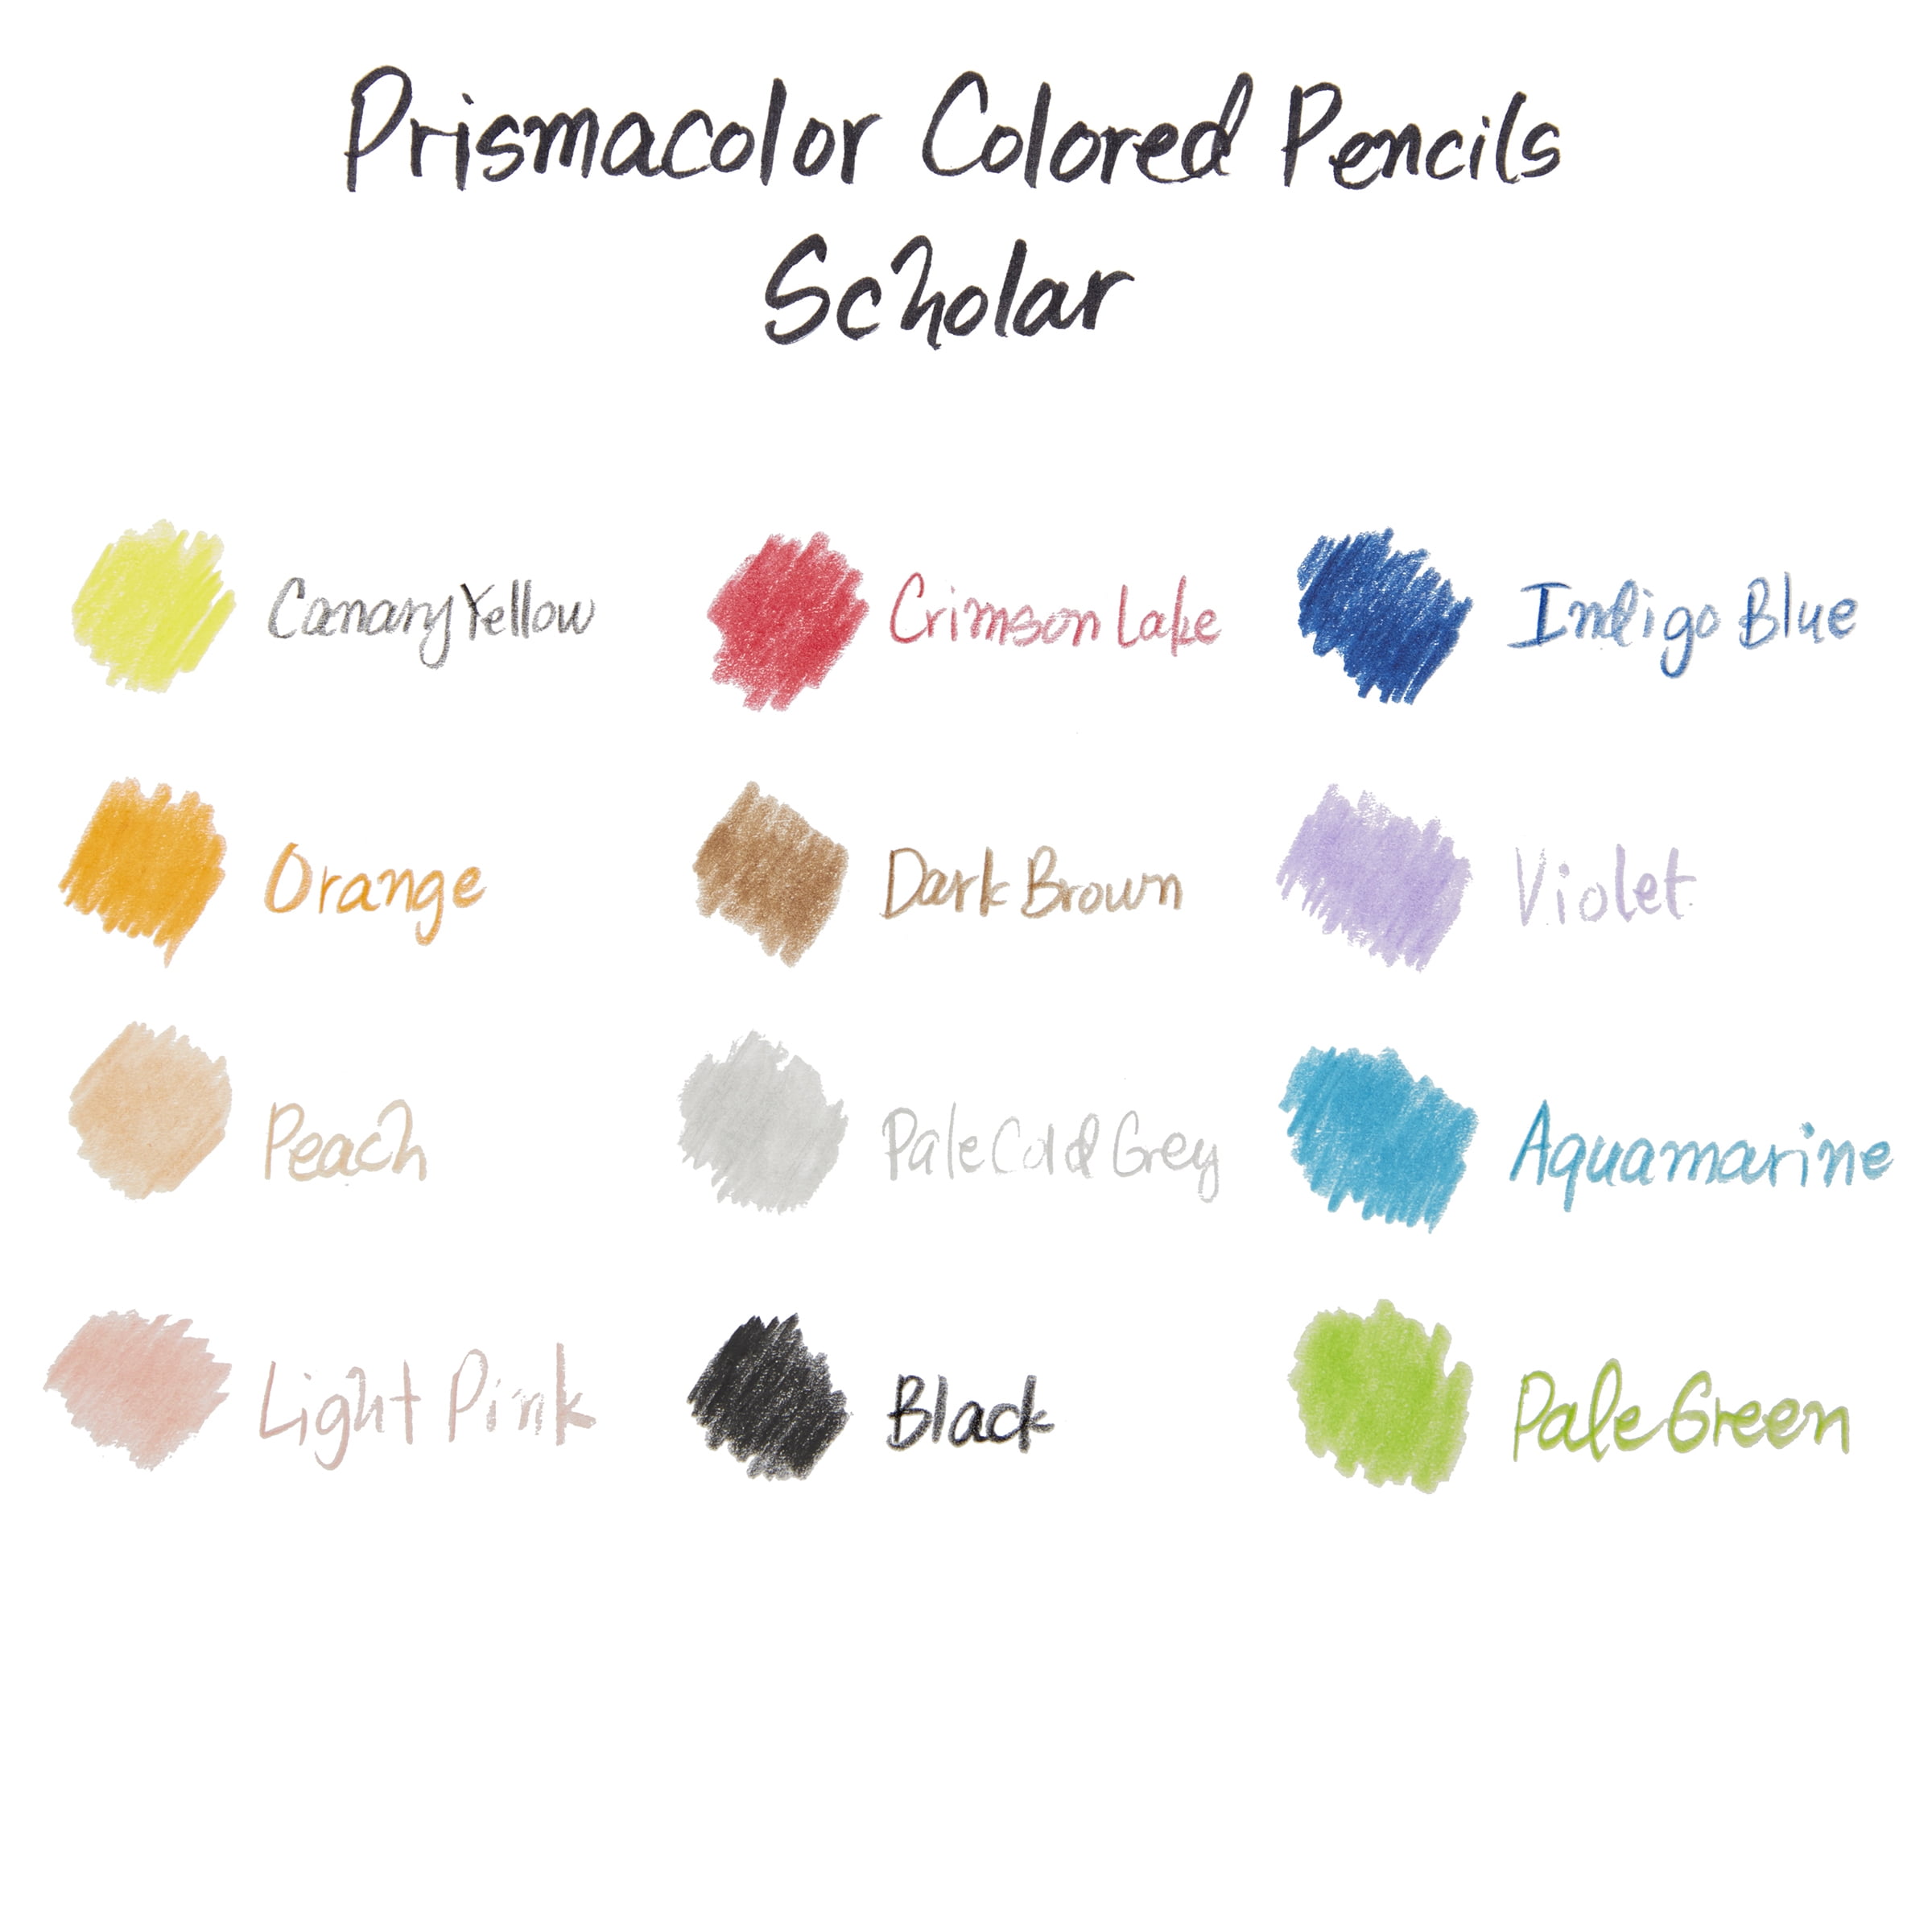 Prismacolor Colored Pencils, Set of 48 Pencils Prismacolor Scholar Pencils  Drawing, Blending, Book Coloring, Prismacolor Arts Crafts -  Norway